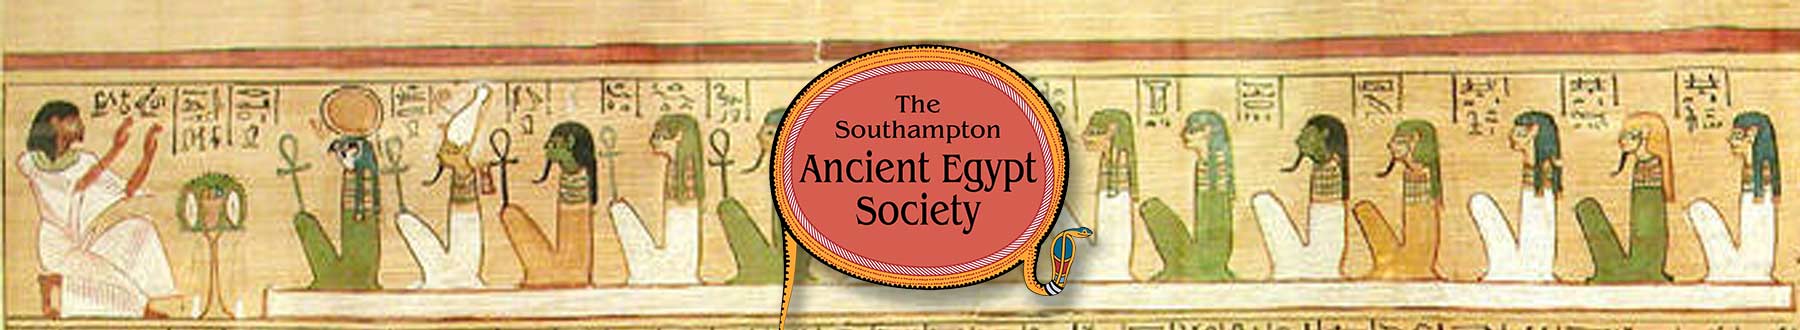 Southampton ancient egypt society